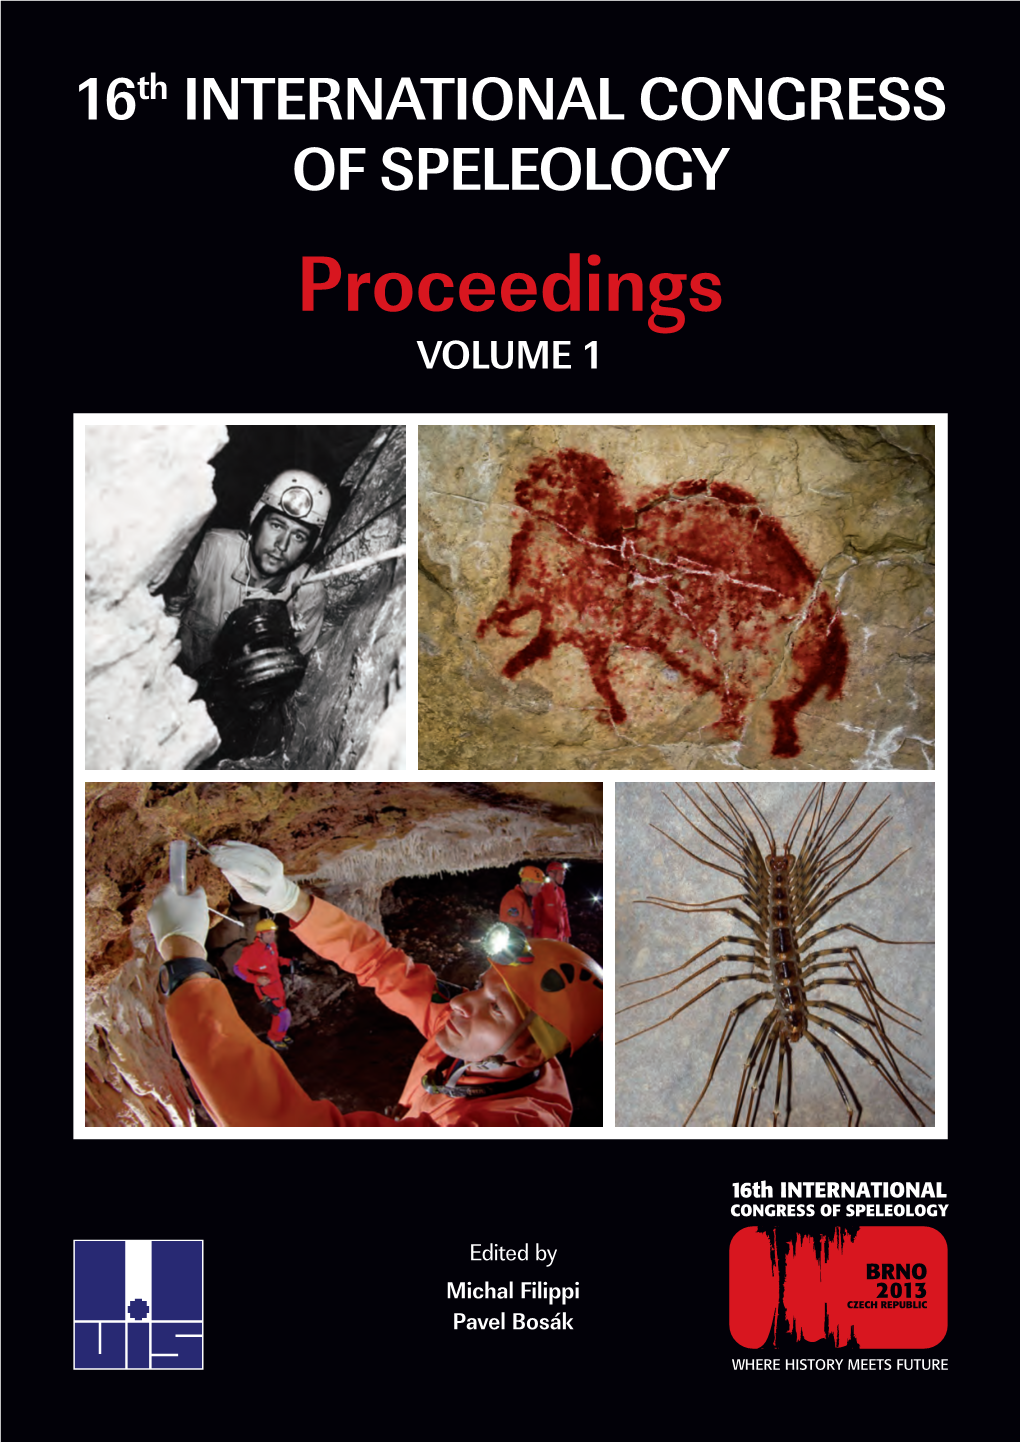 Proceedings VOLUME 1